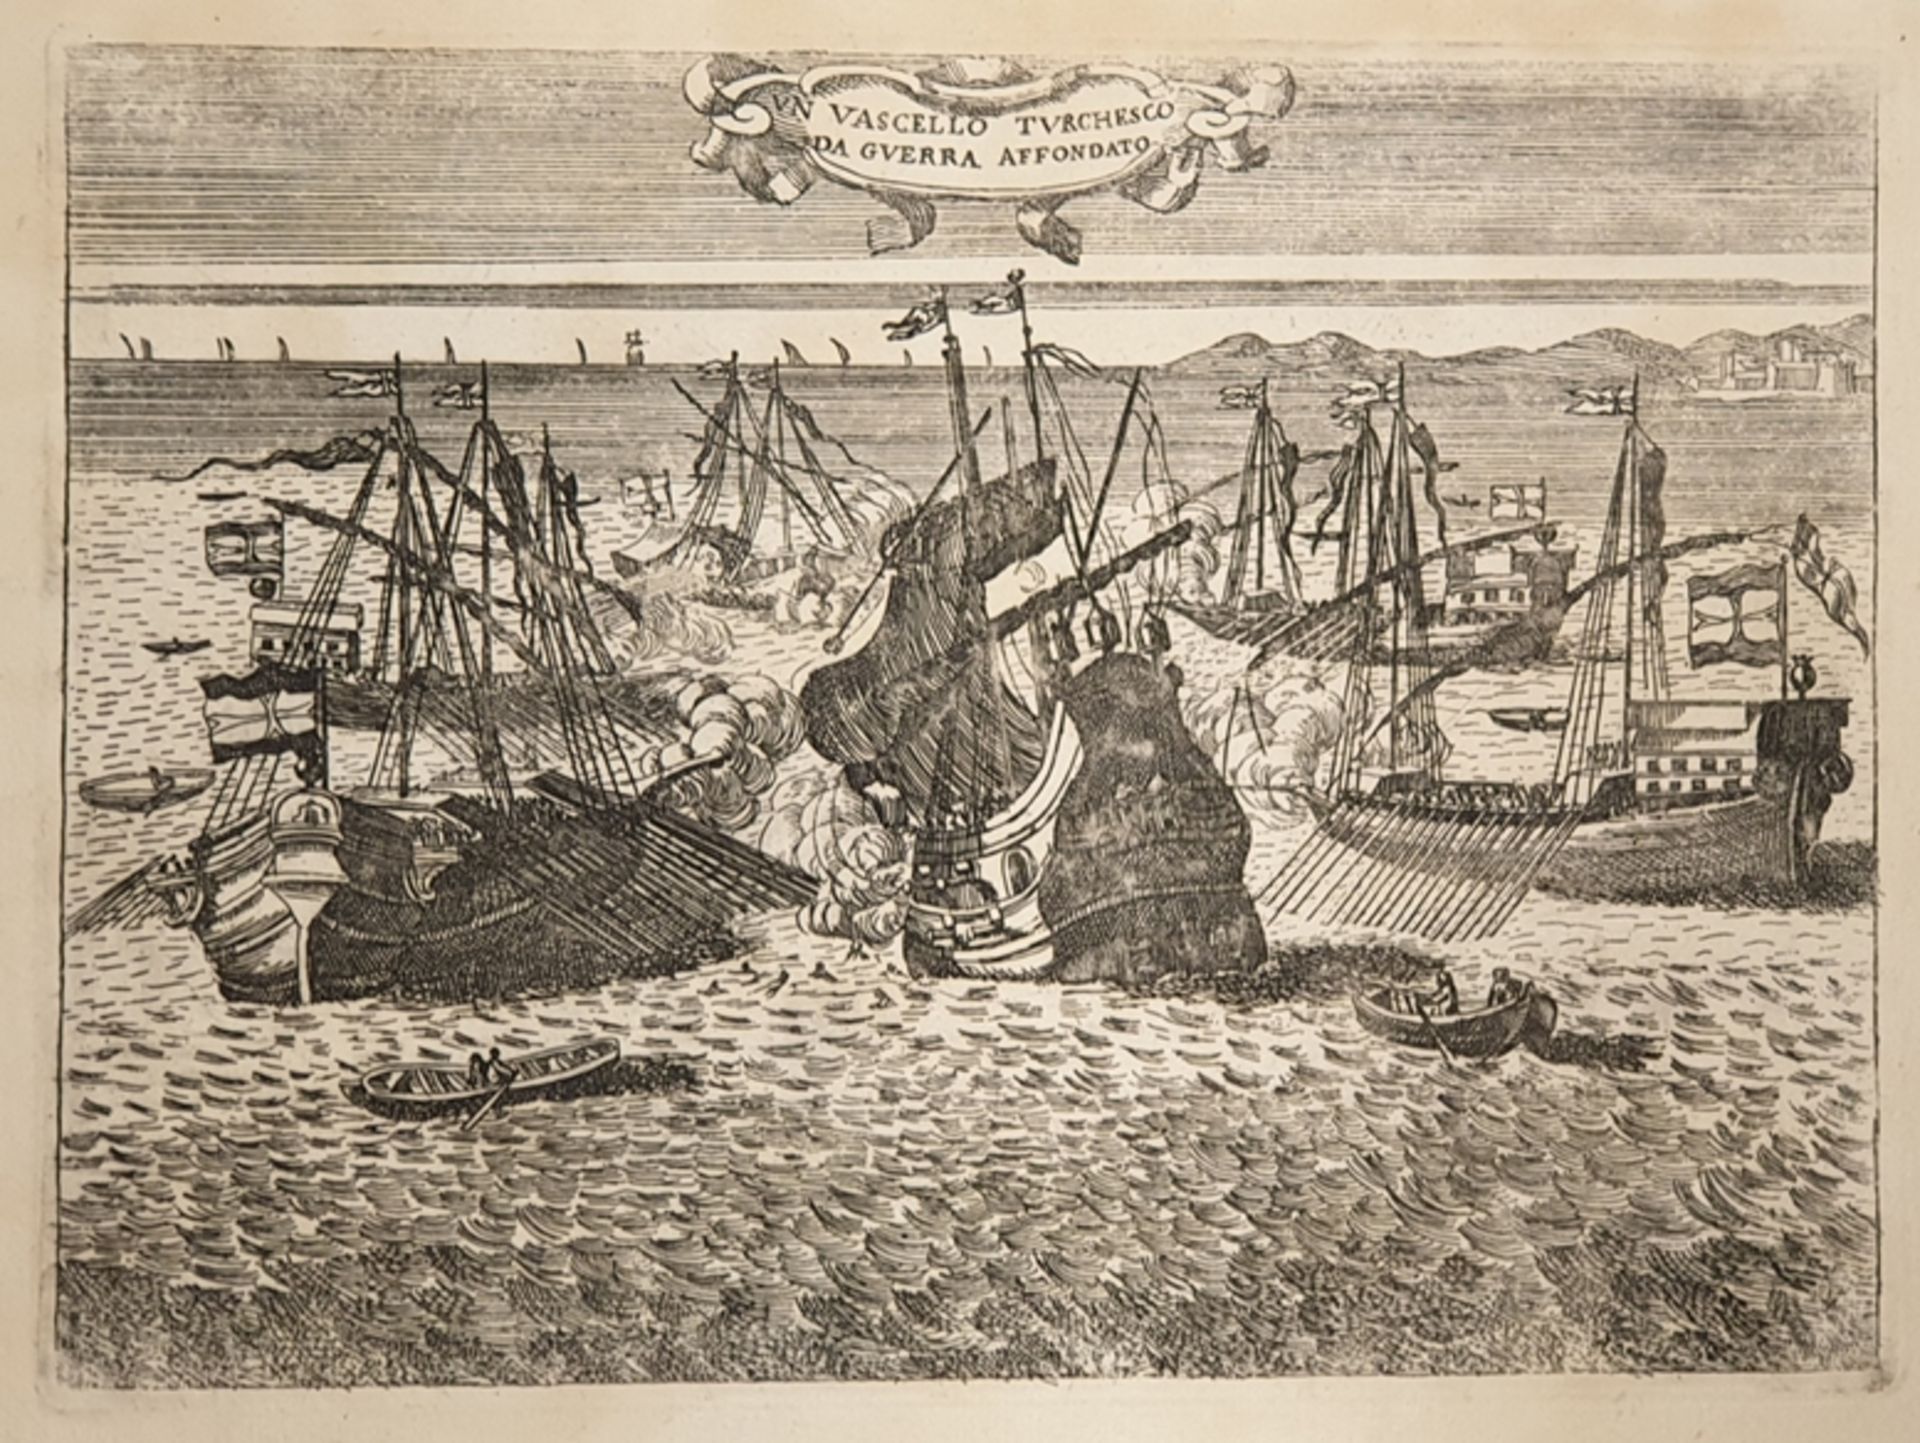 VN VASCELLO TURCHESCO DA GUERRA AFFONDATO, 18.Jahrhundert, Größe: ca. 33,5x24cm - Bild 2 aus 2